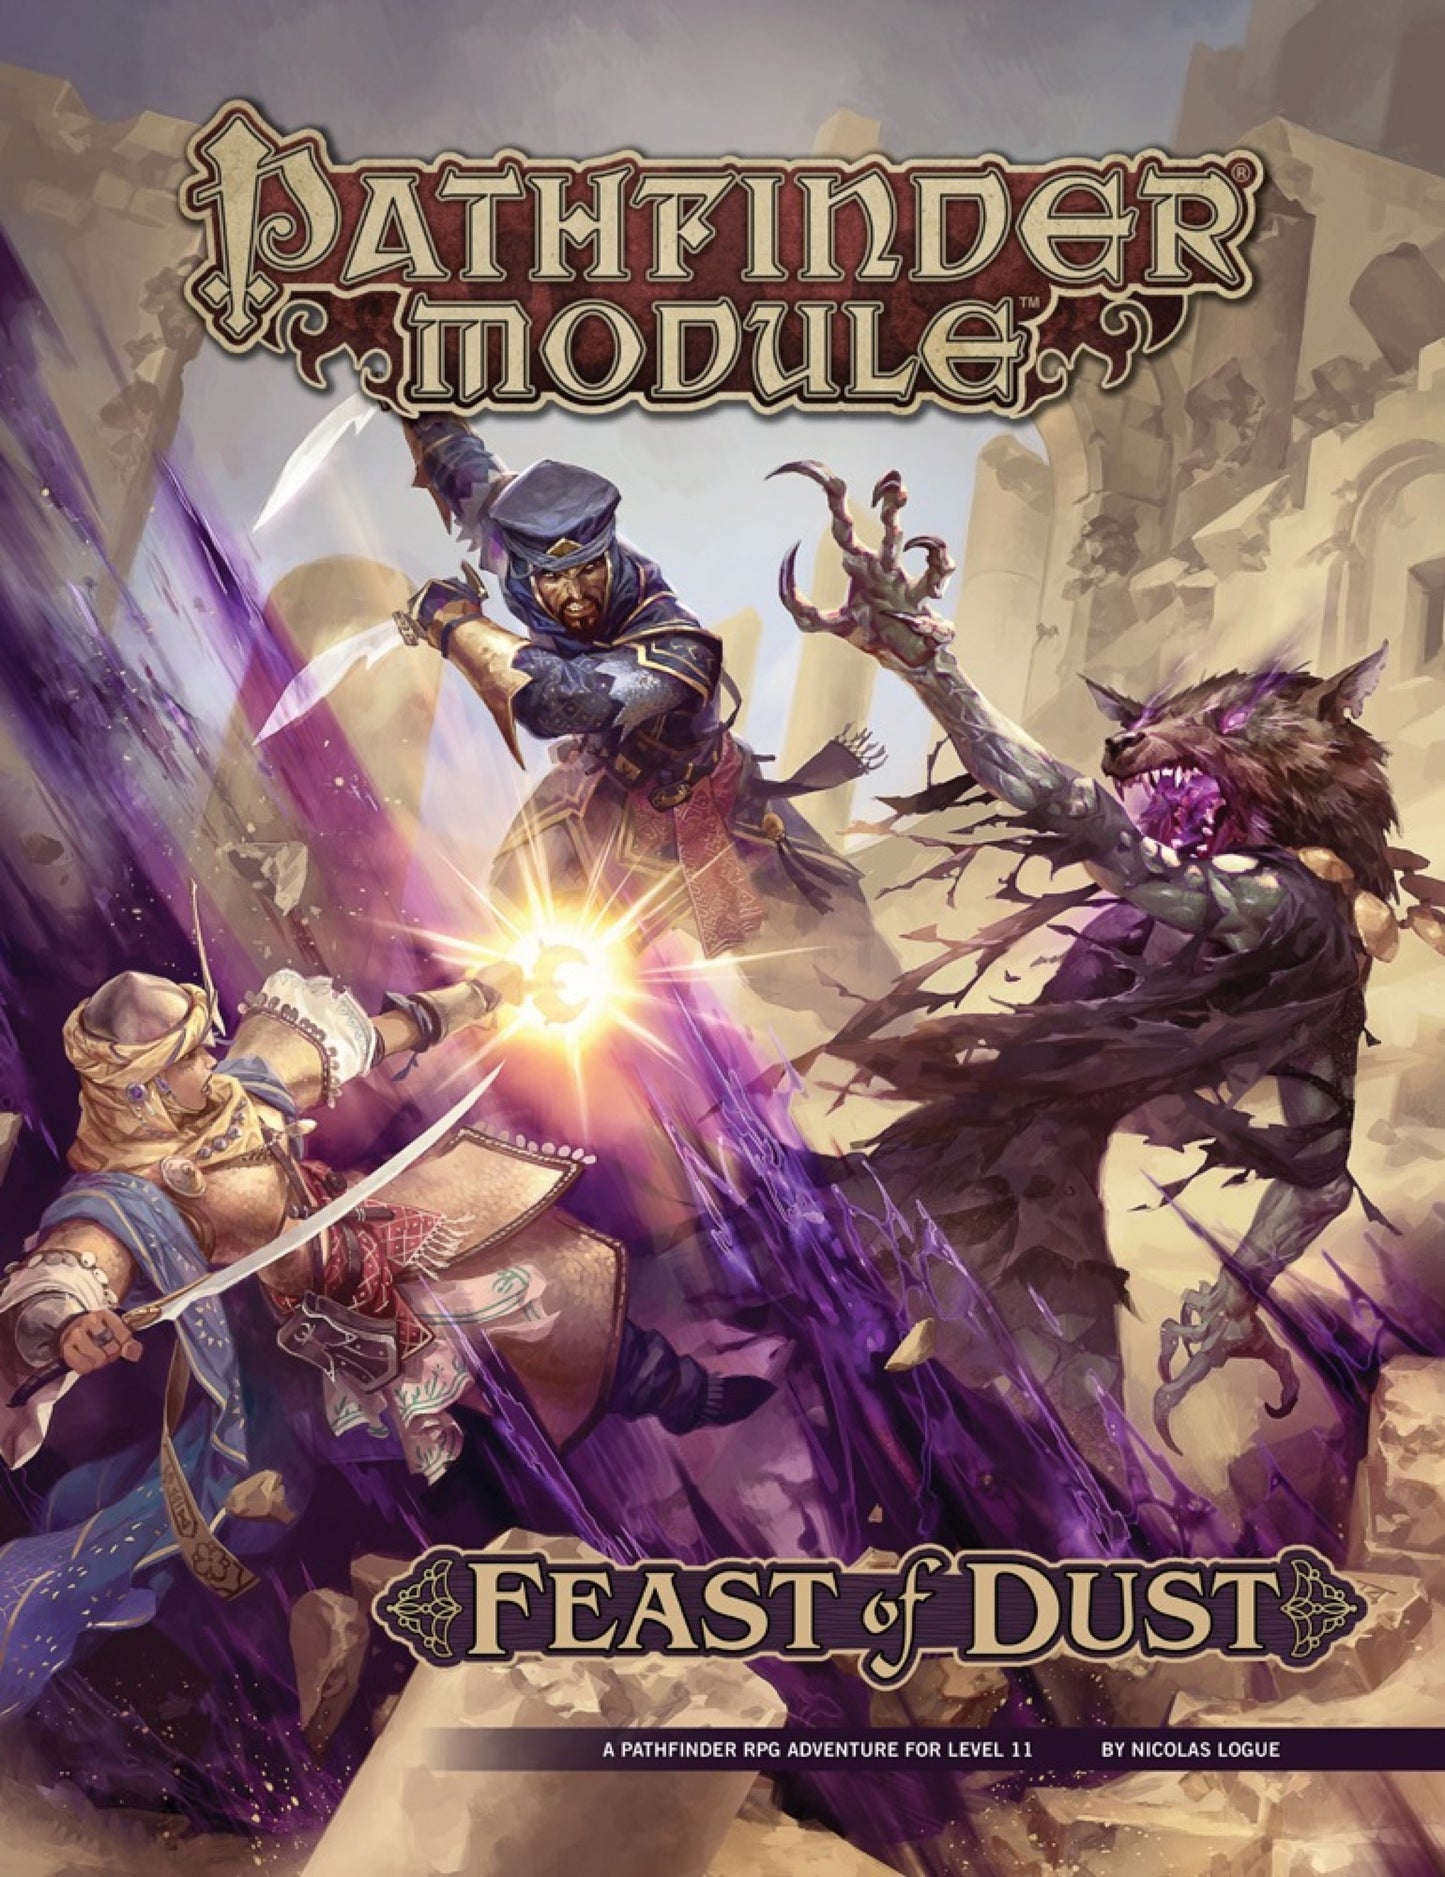 Pathfinder Module: Feast of Dust by Nicolas Logue